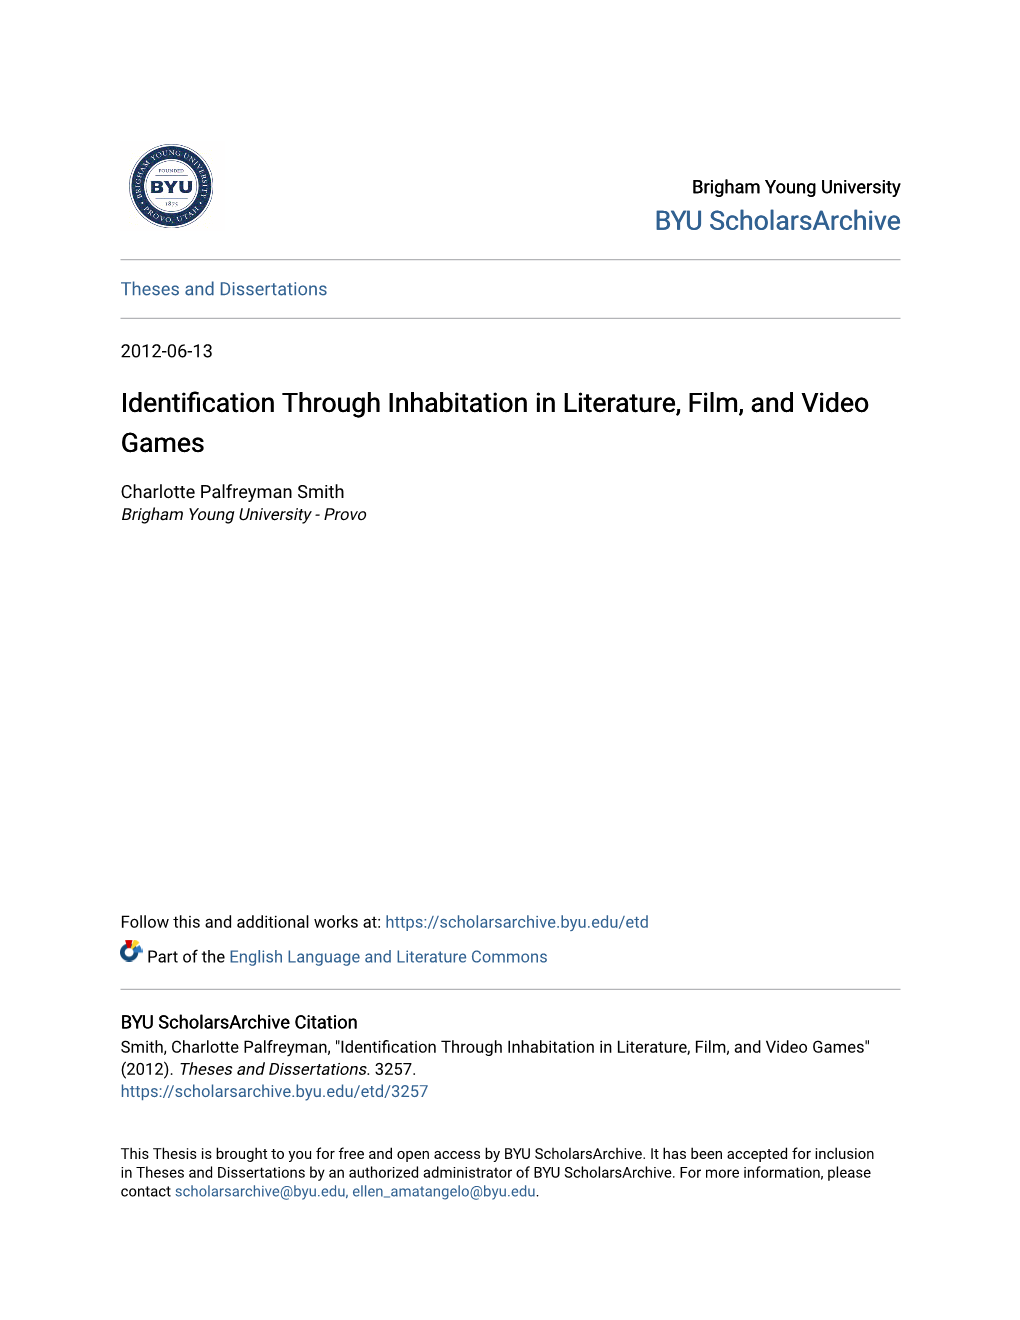 Identification Through Inhabitation in Literature, Film, and Video Games